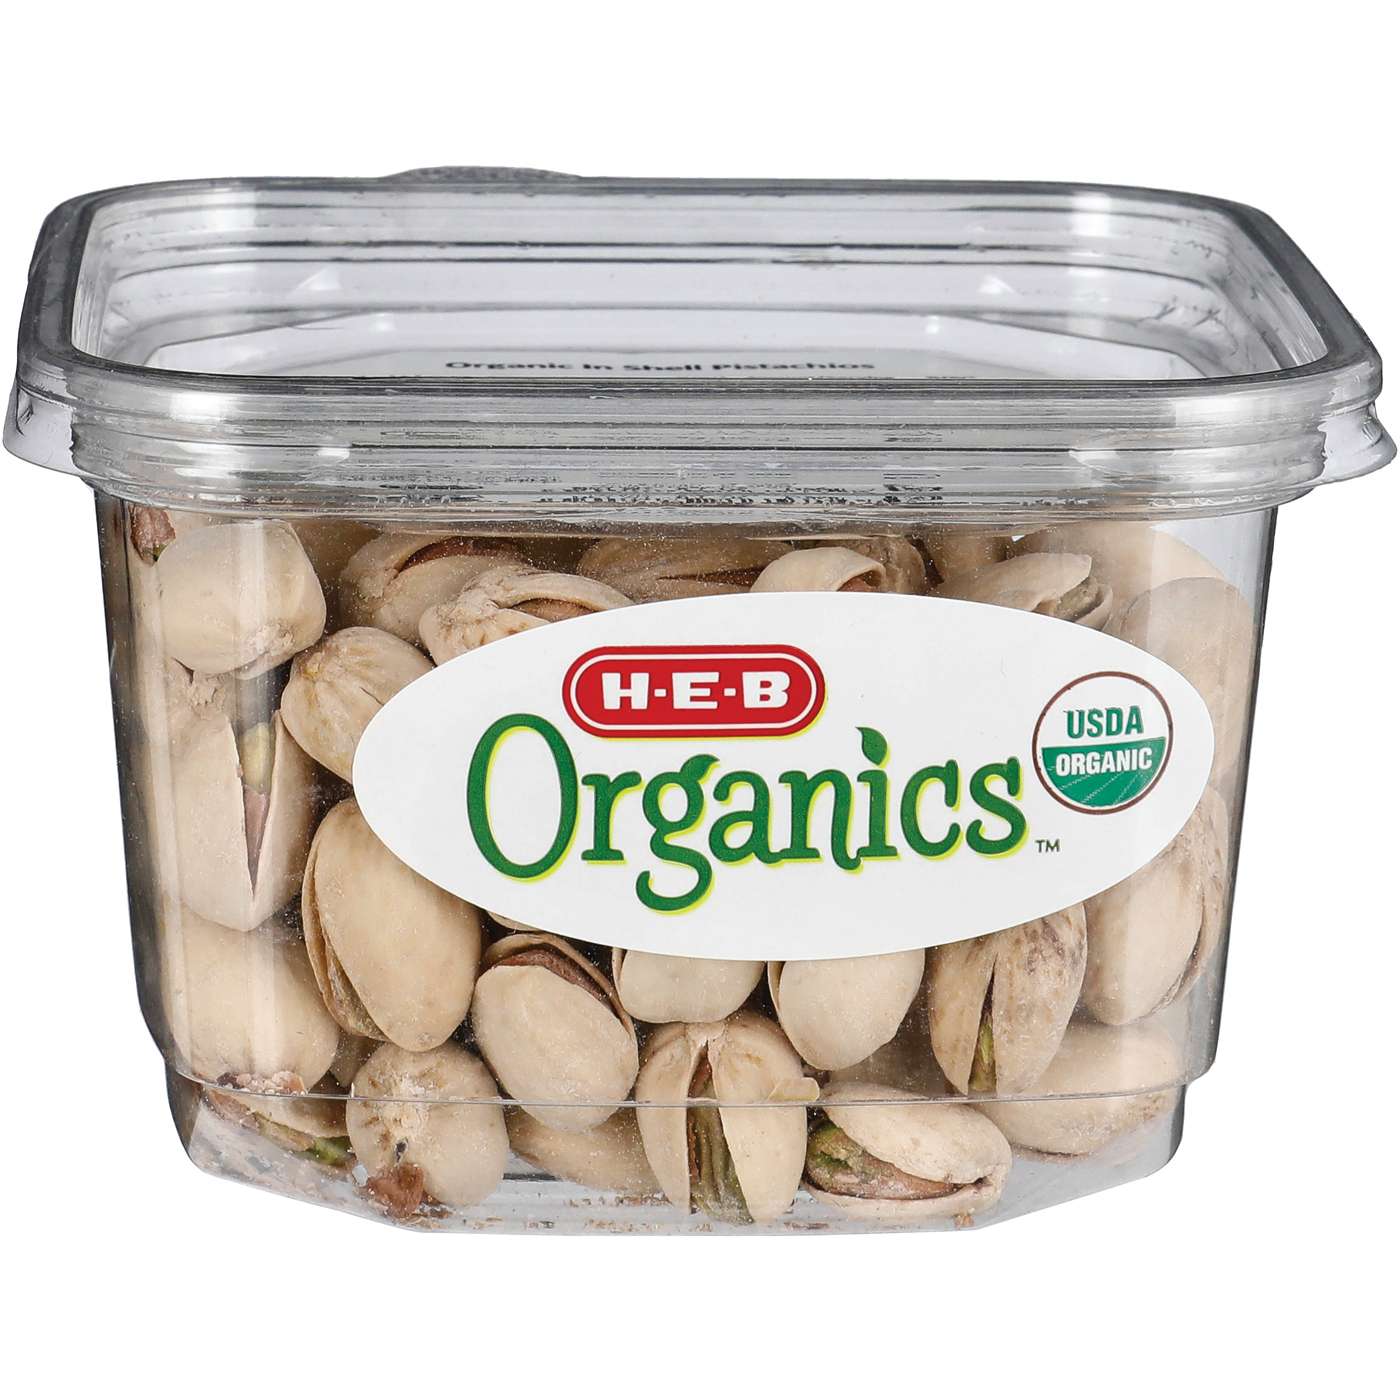 H-E-B Organics Pistachios; image 2 of 2